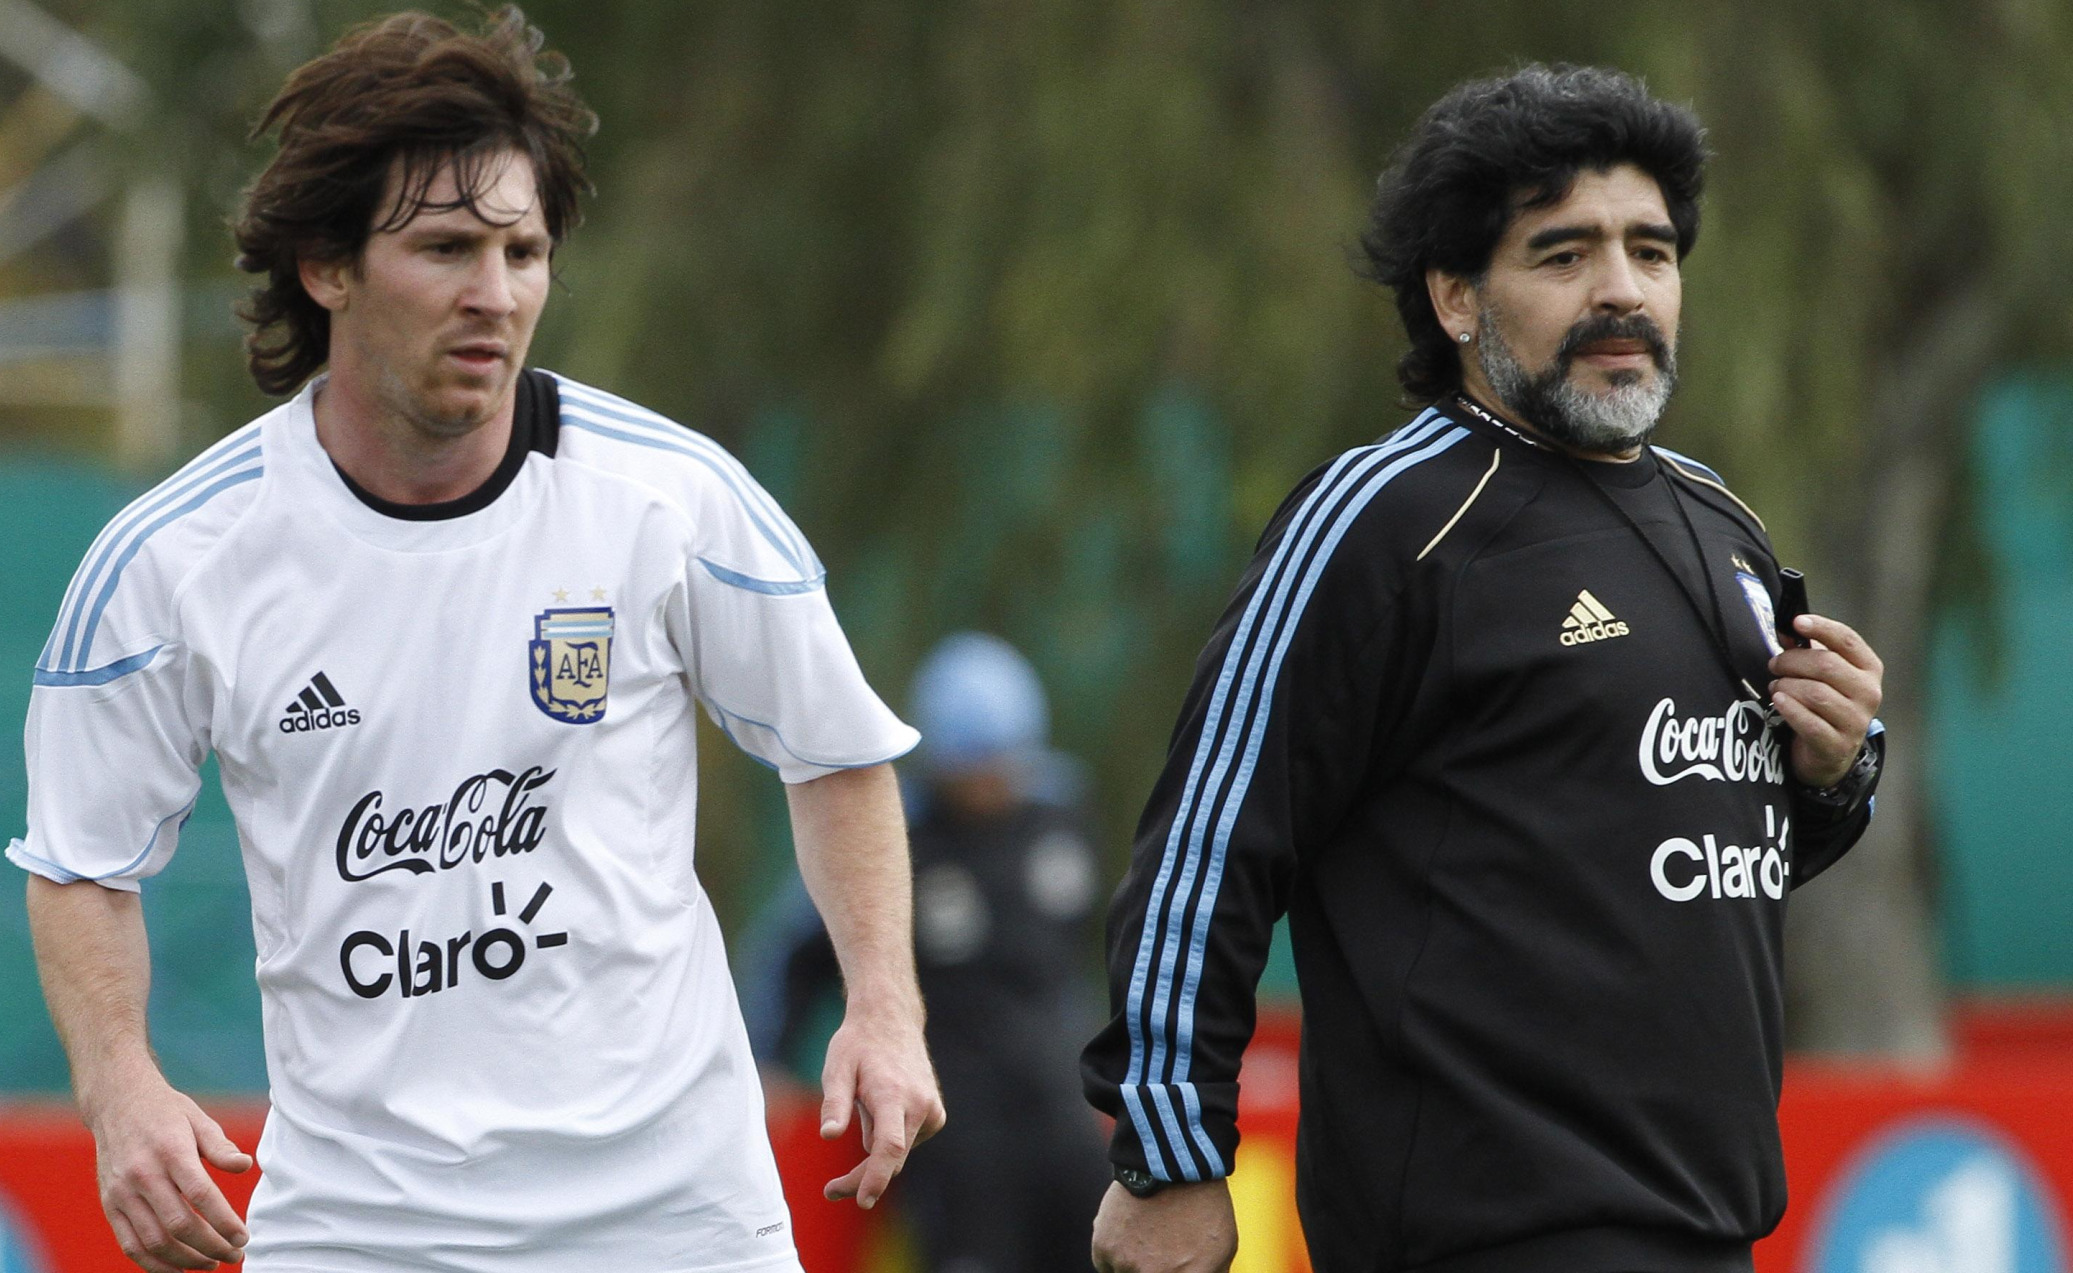 argentina, VM i Sydafrika, Fotbolls-VM, Diego Maradona, Lionel Messi